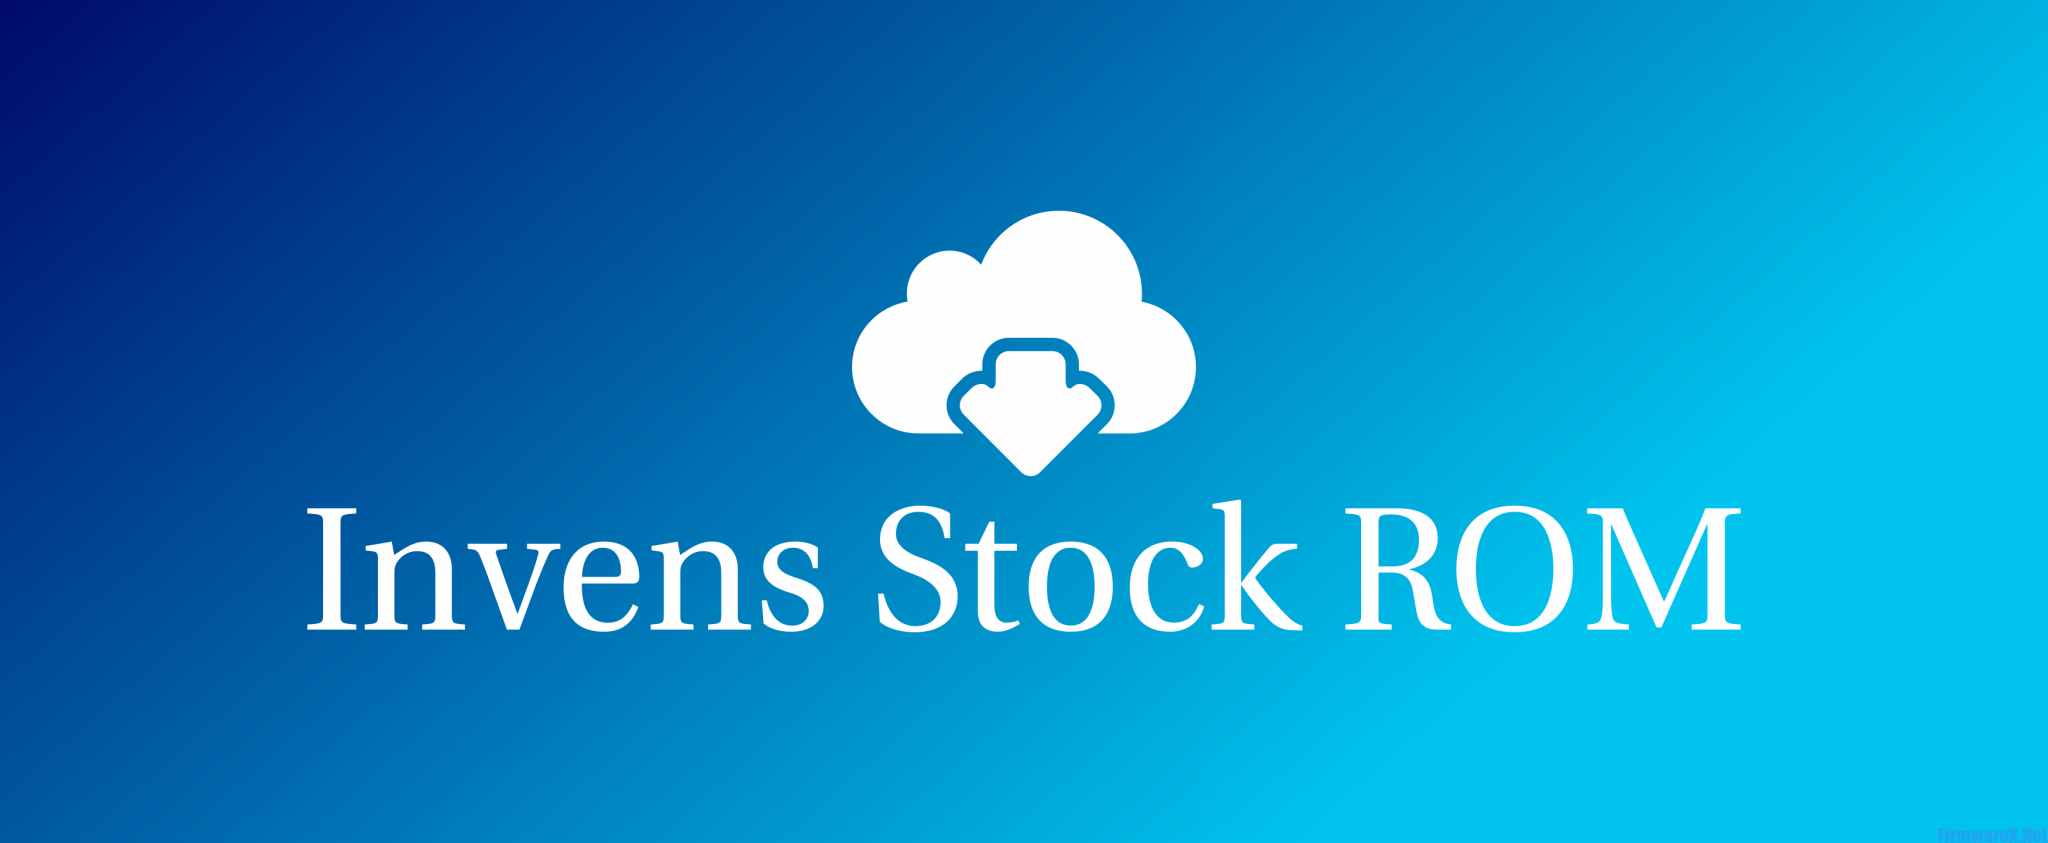 Invens Stock ROM